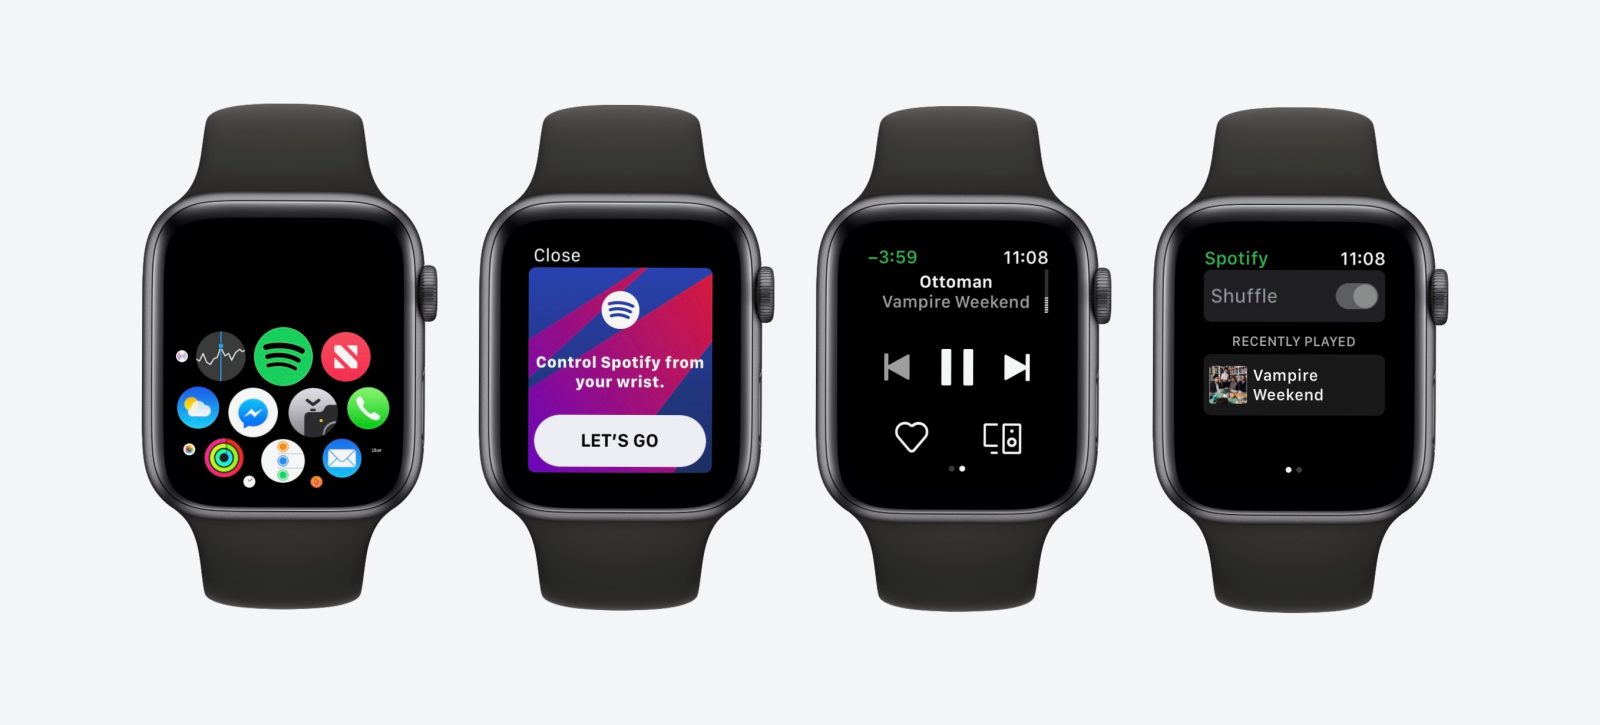 Spotify app apple watch cellular